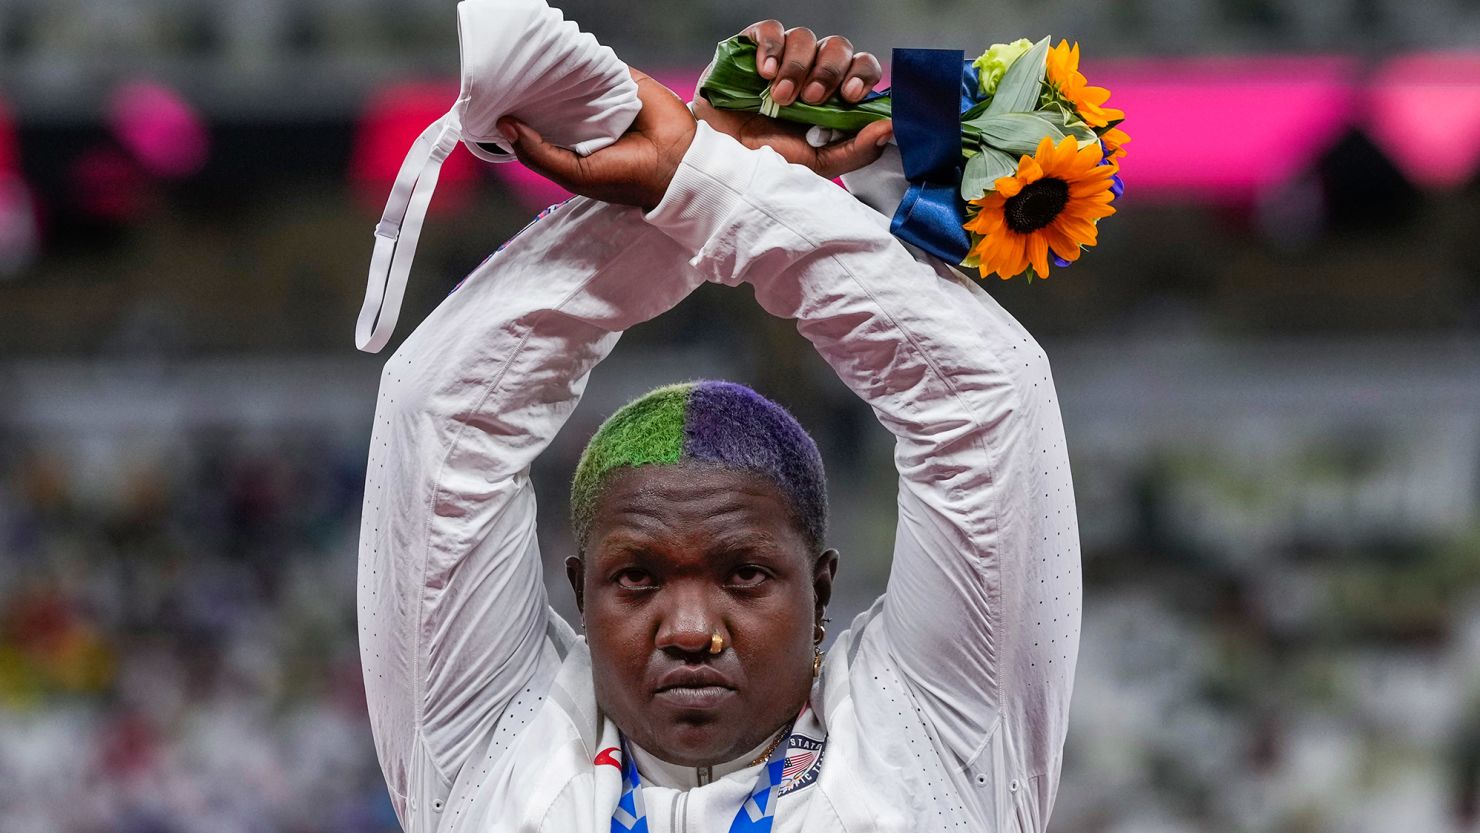 summer olympic medal podium